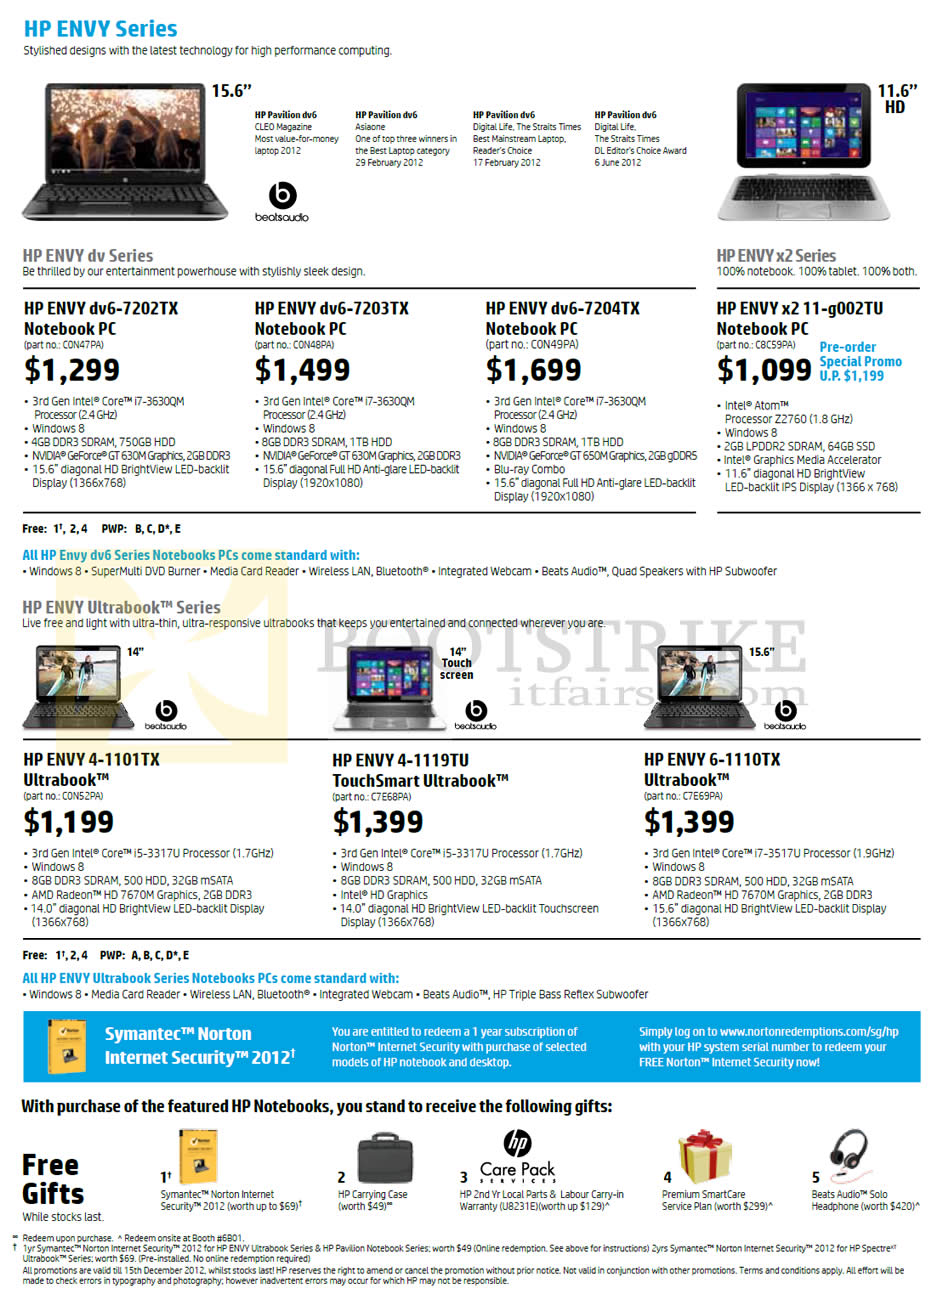 SITEX 2012 price list image brochure of HP Notebooks Envy Dv6-7202TX, Dv6-7203TX, Dv6-7204TX, X2-g002TU, Ultrabooks Envy 4-1101TX, 4-1119TU, 6-1110TX